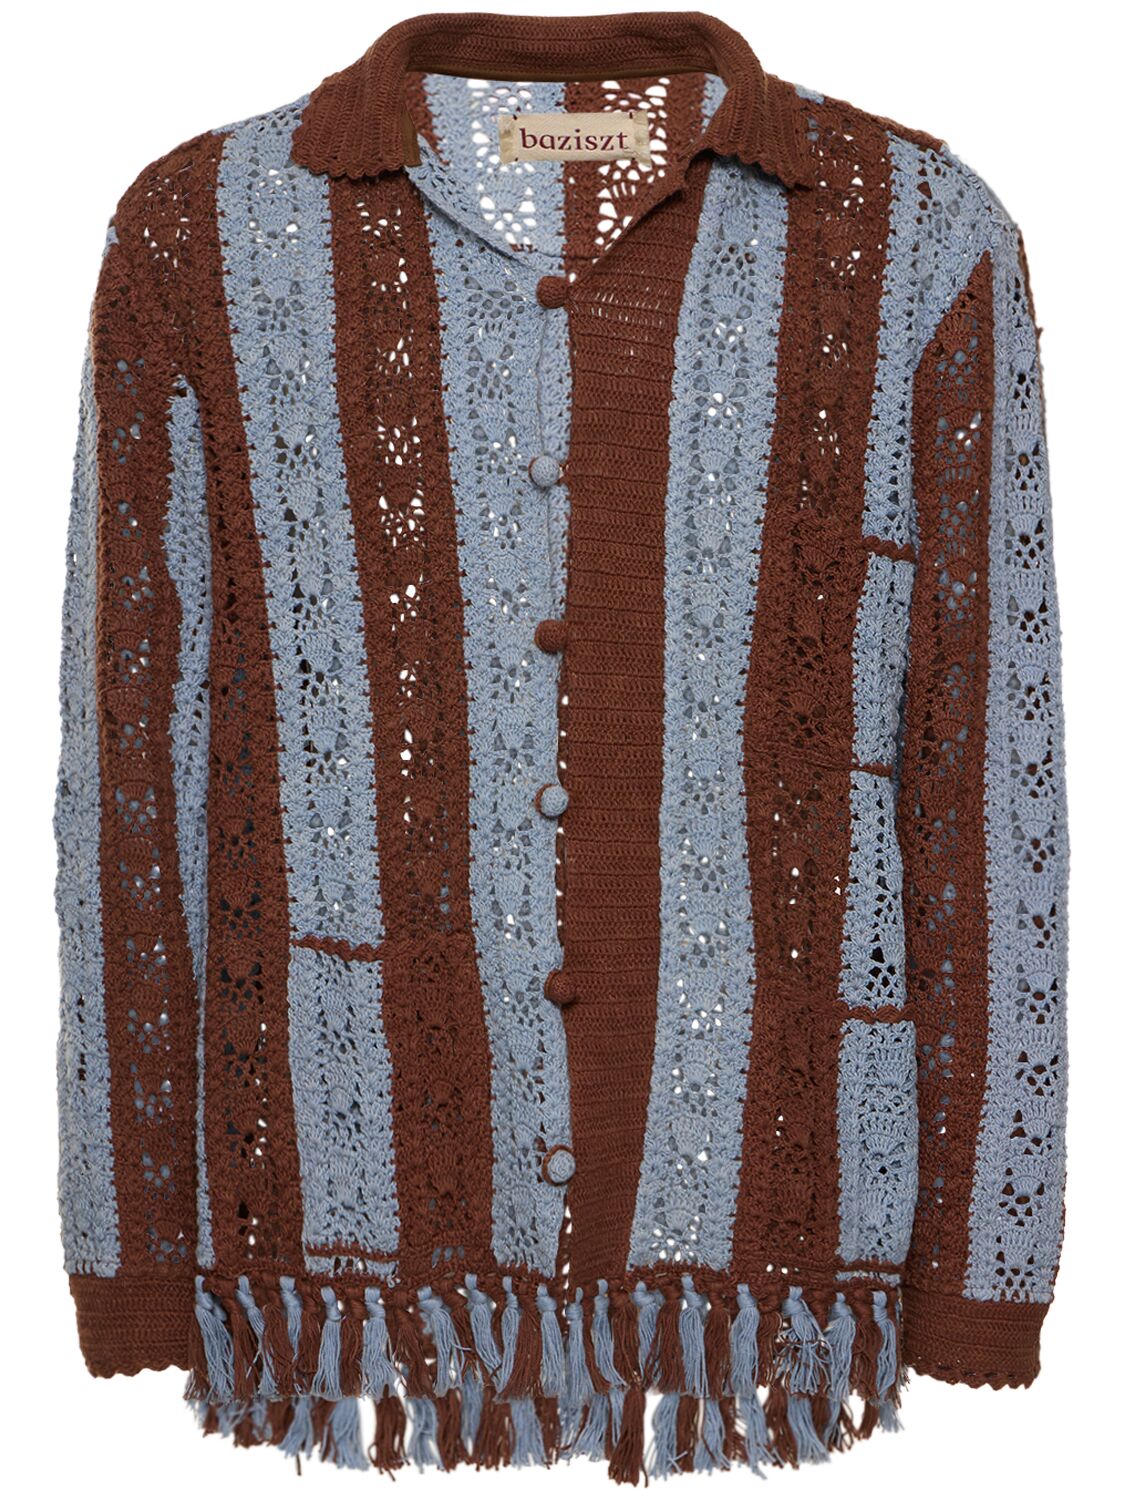 Baziszt Crocheted Cotton Overshirt In 브라운,블루